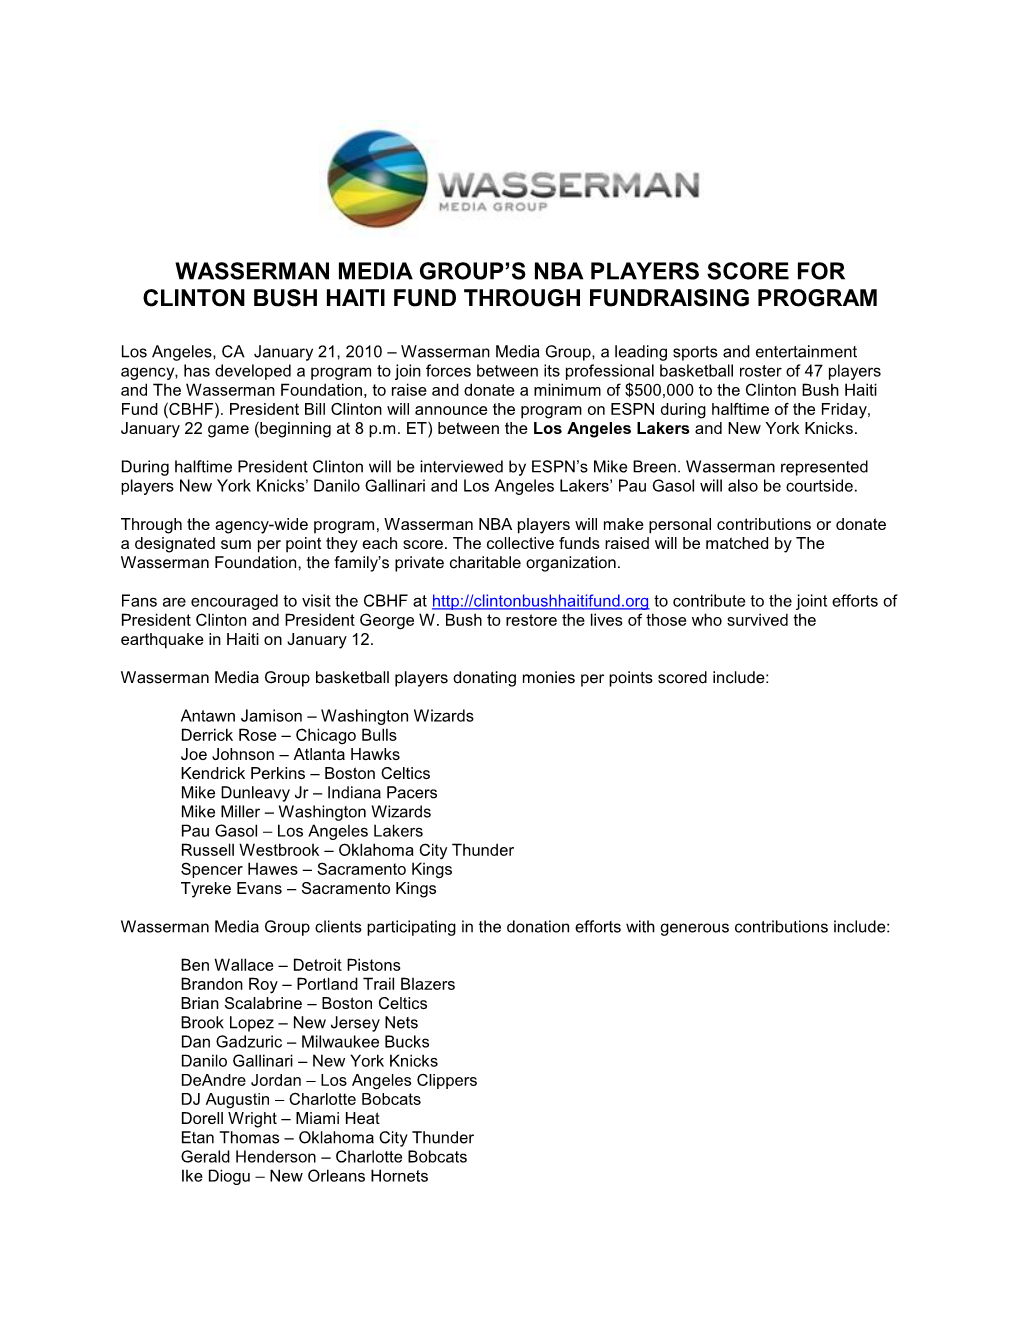 Wasserman Media Group's Nba Players Score for Clinton